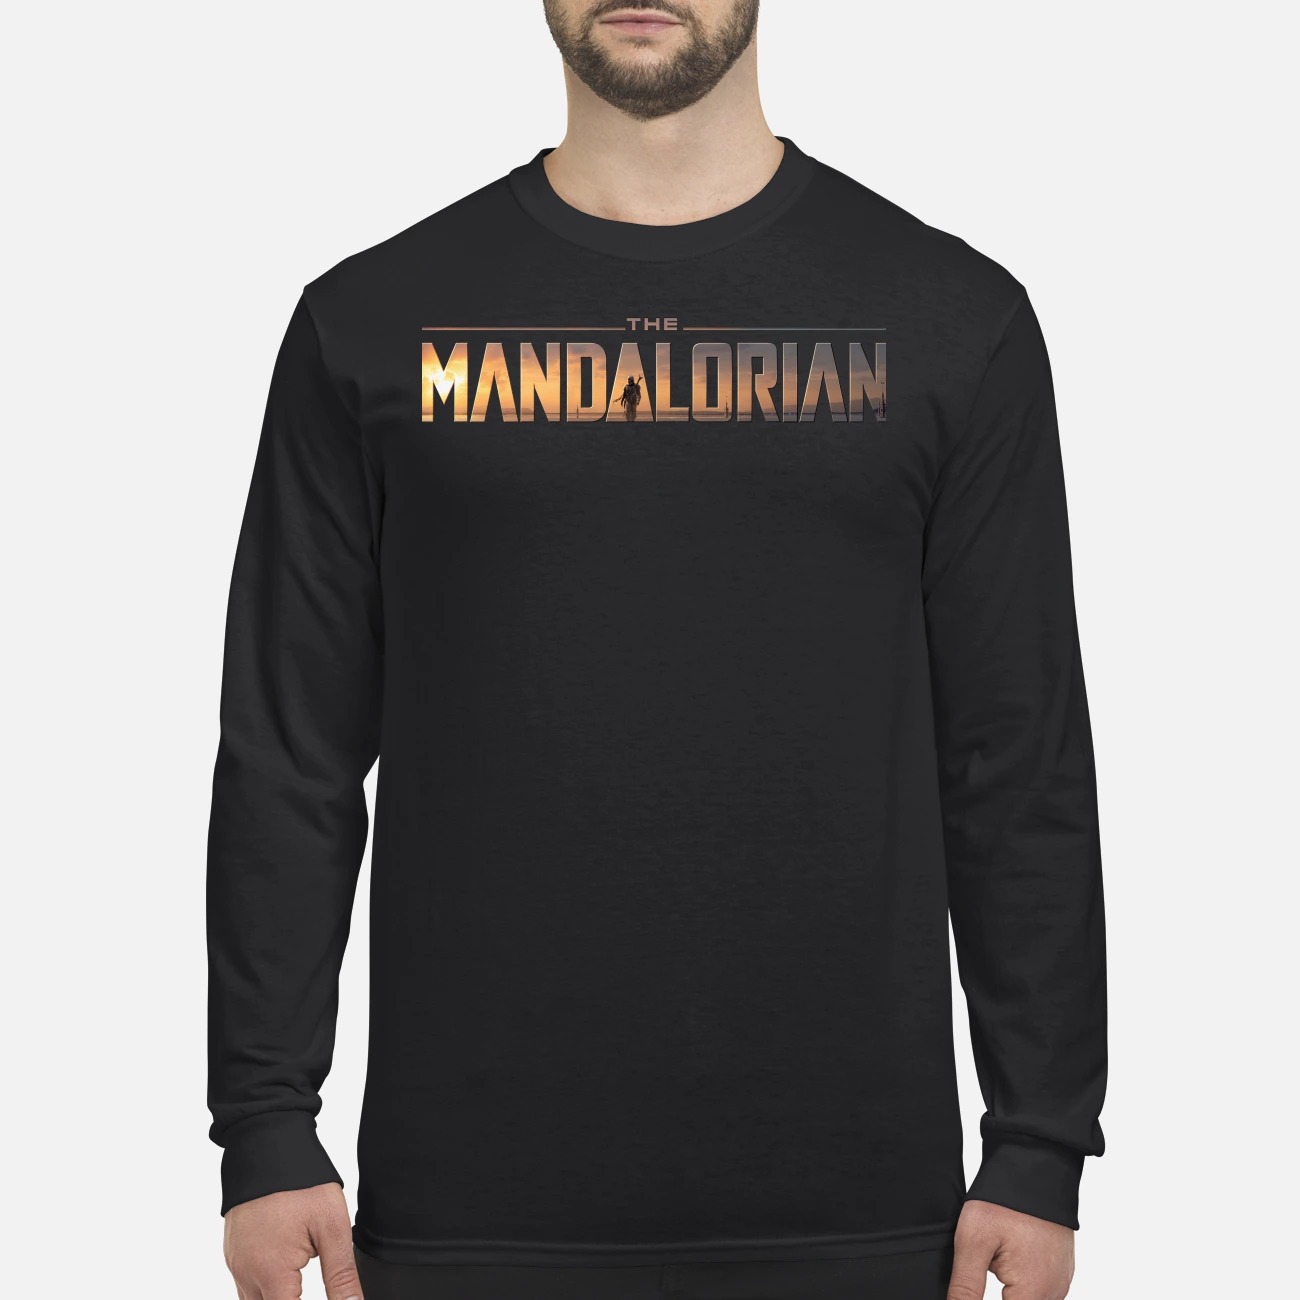 The mandalorian star wars men's long sleeved shirt